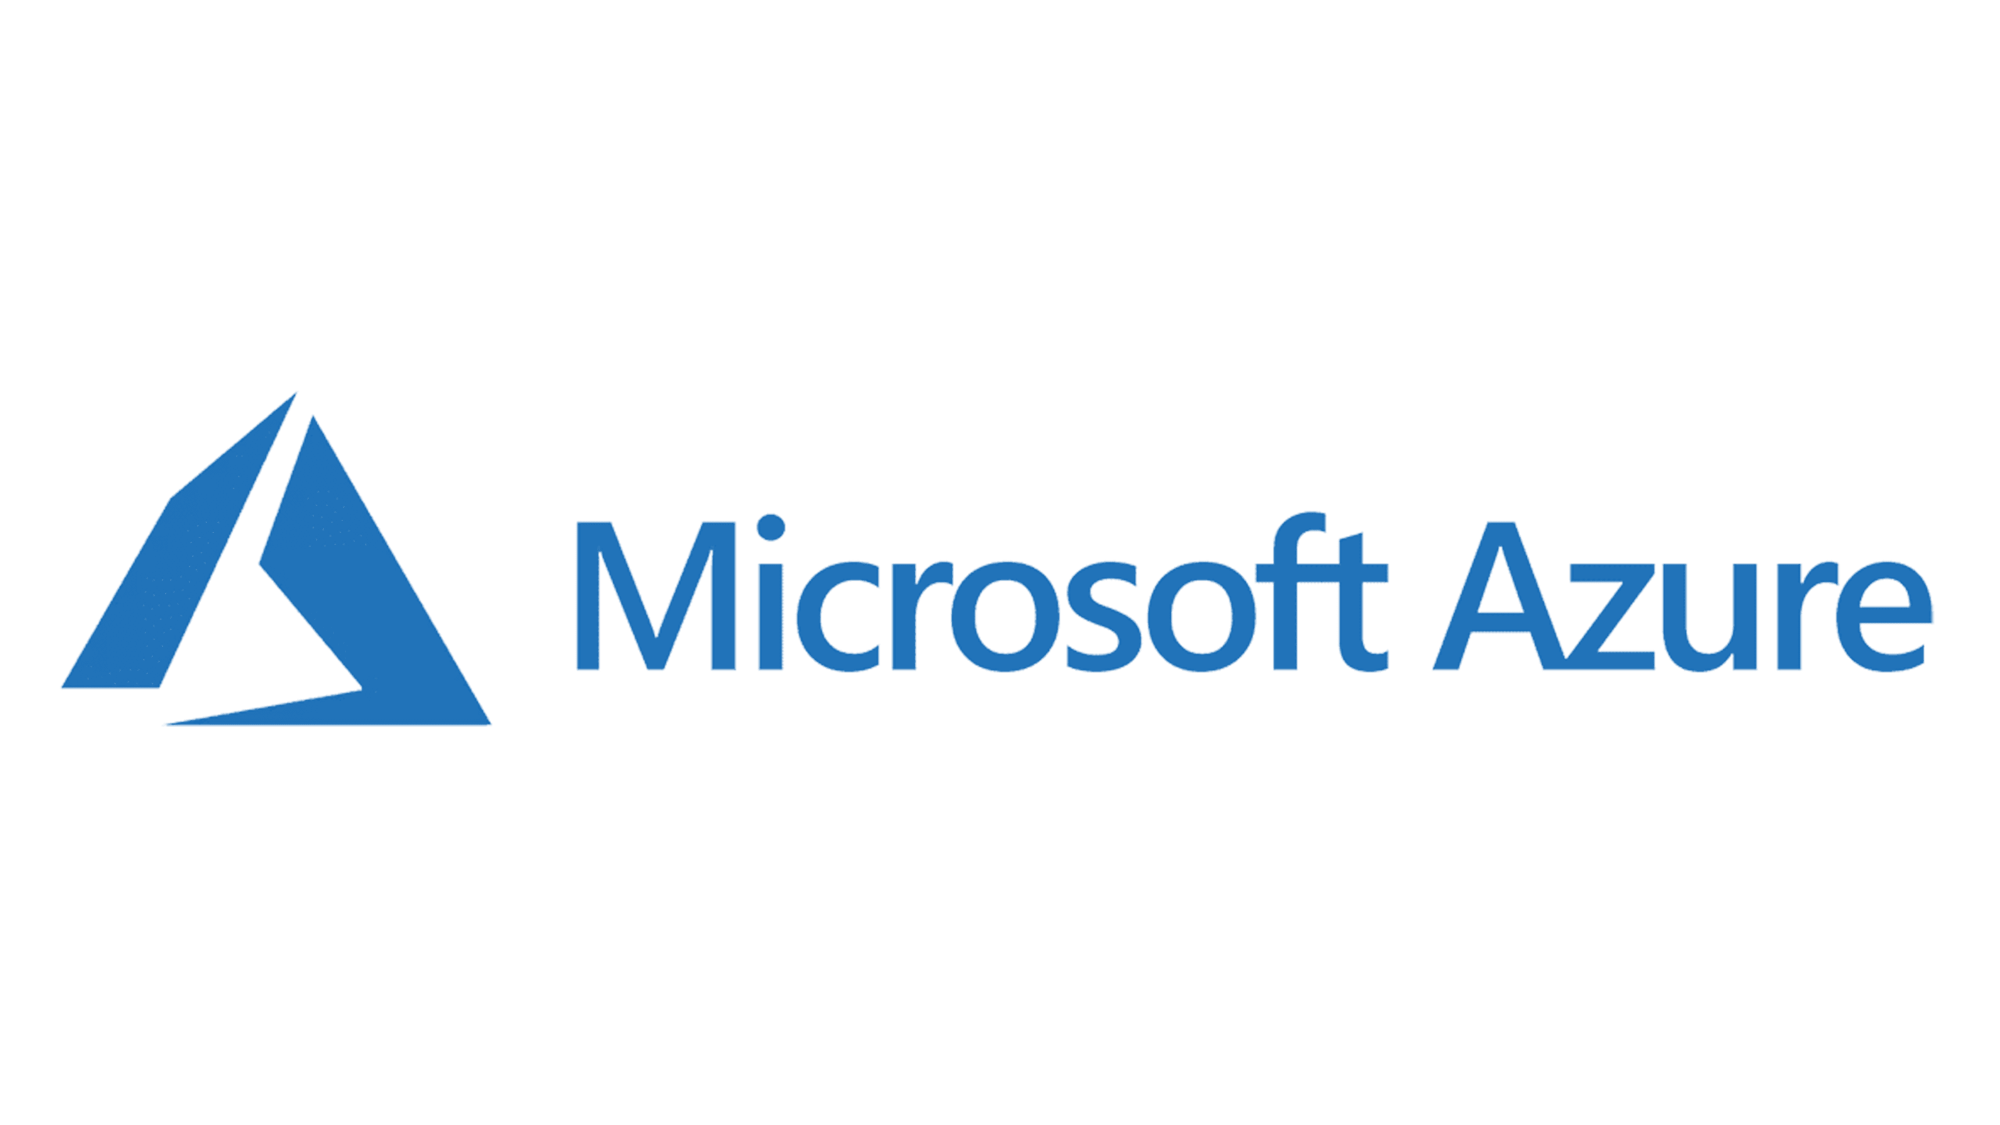 Microsoft-Azure-Logo-2017